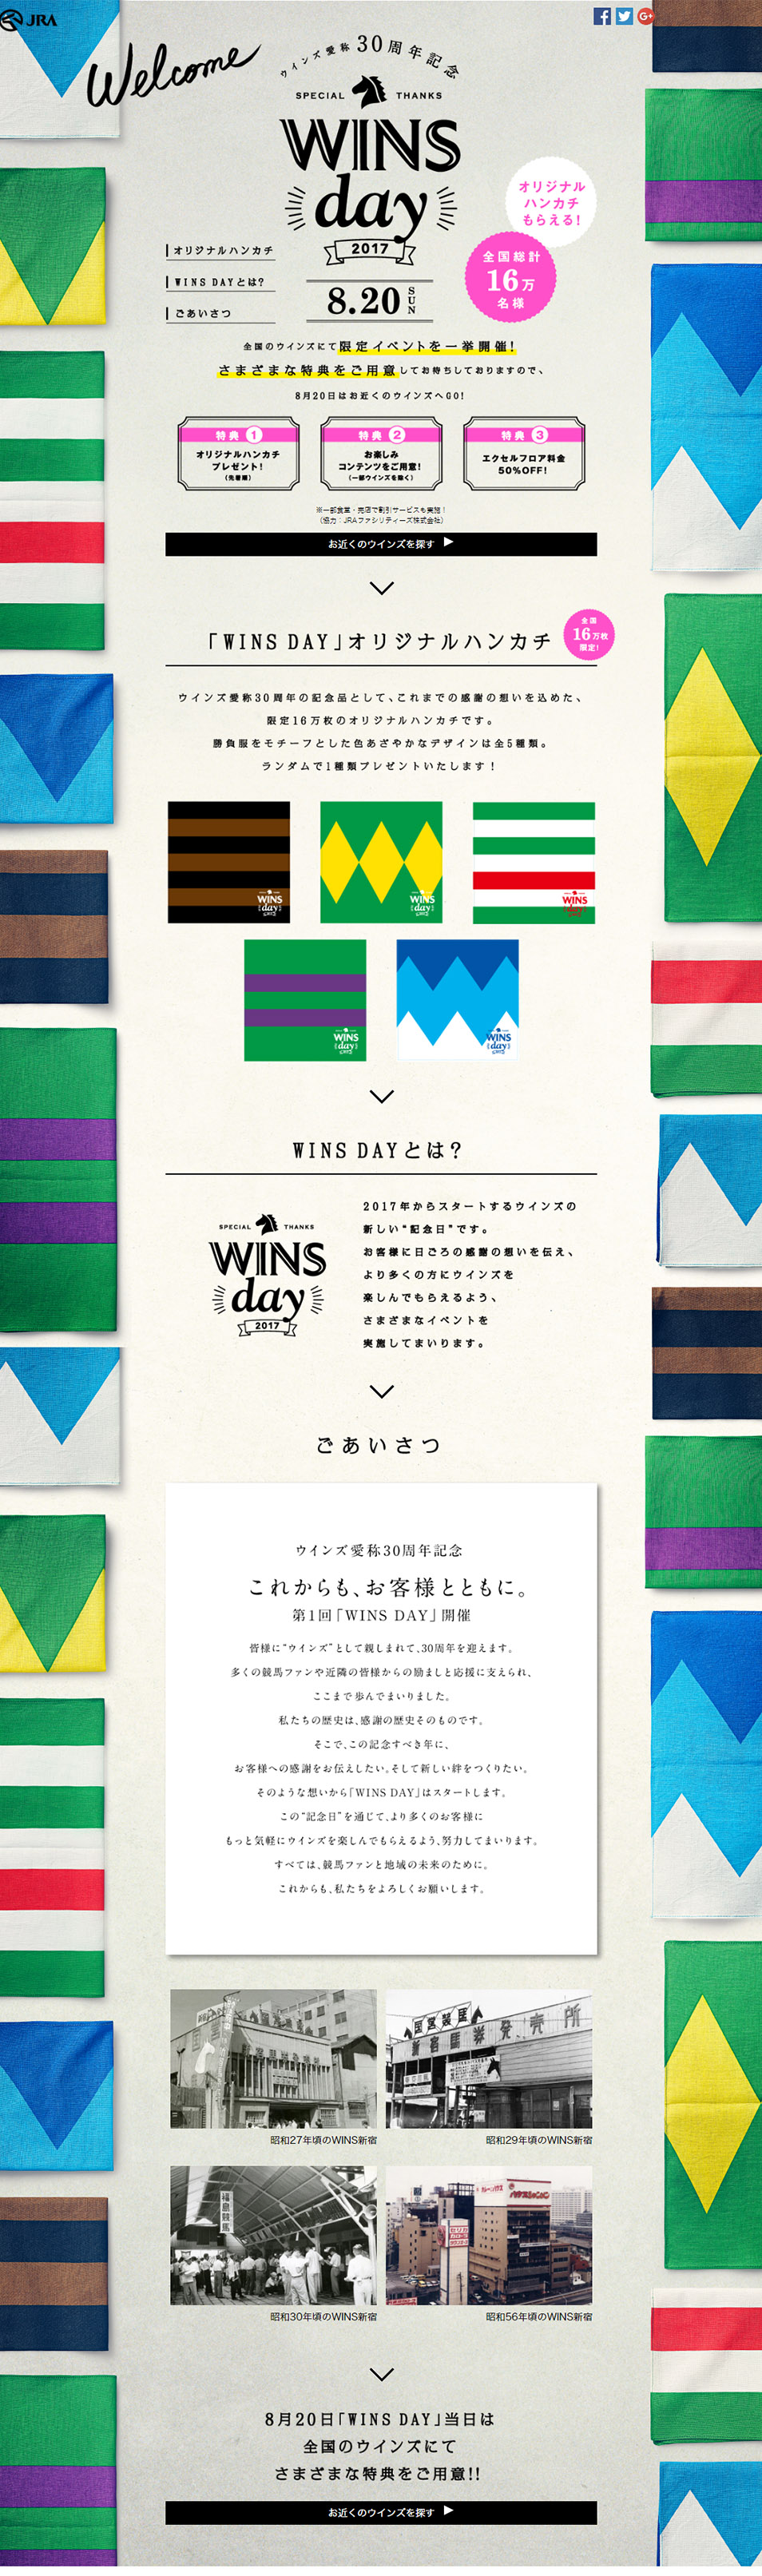 WINS day_pc_1